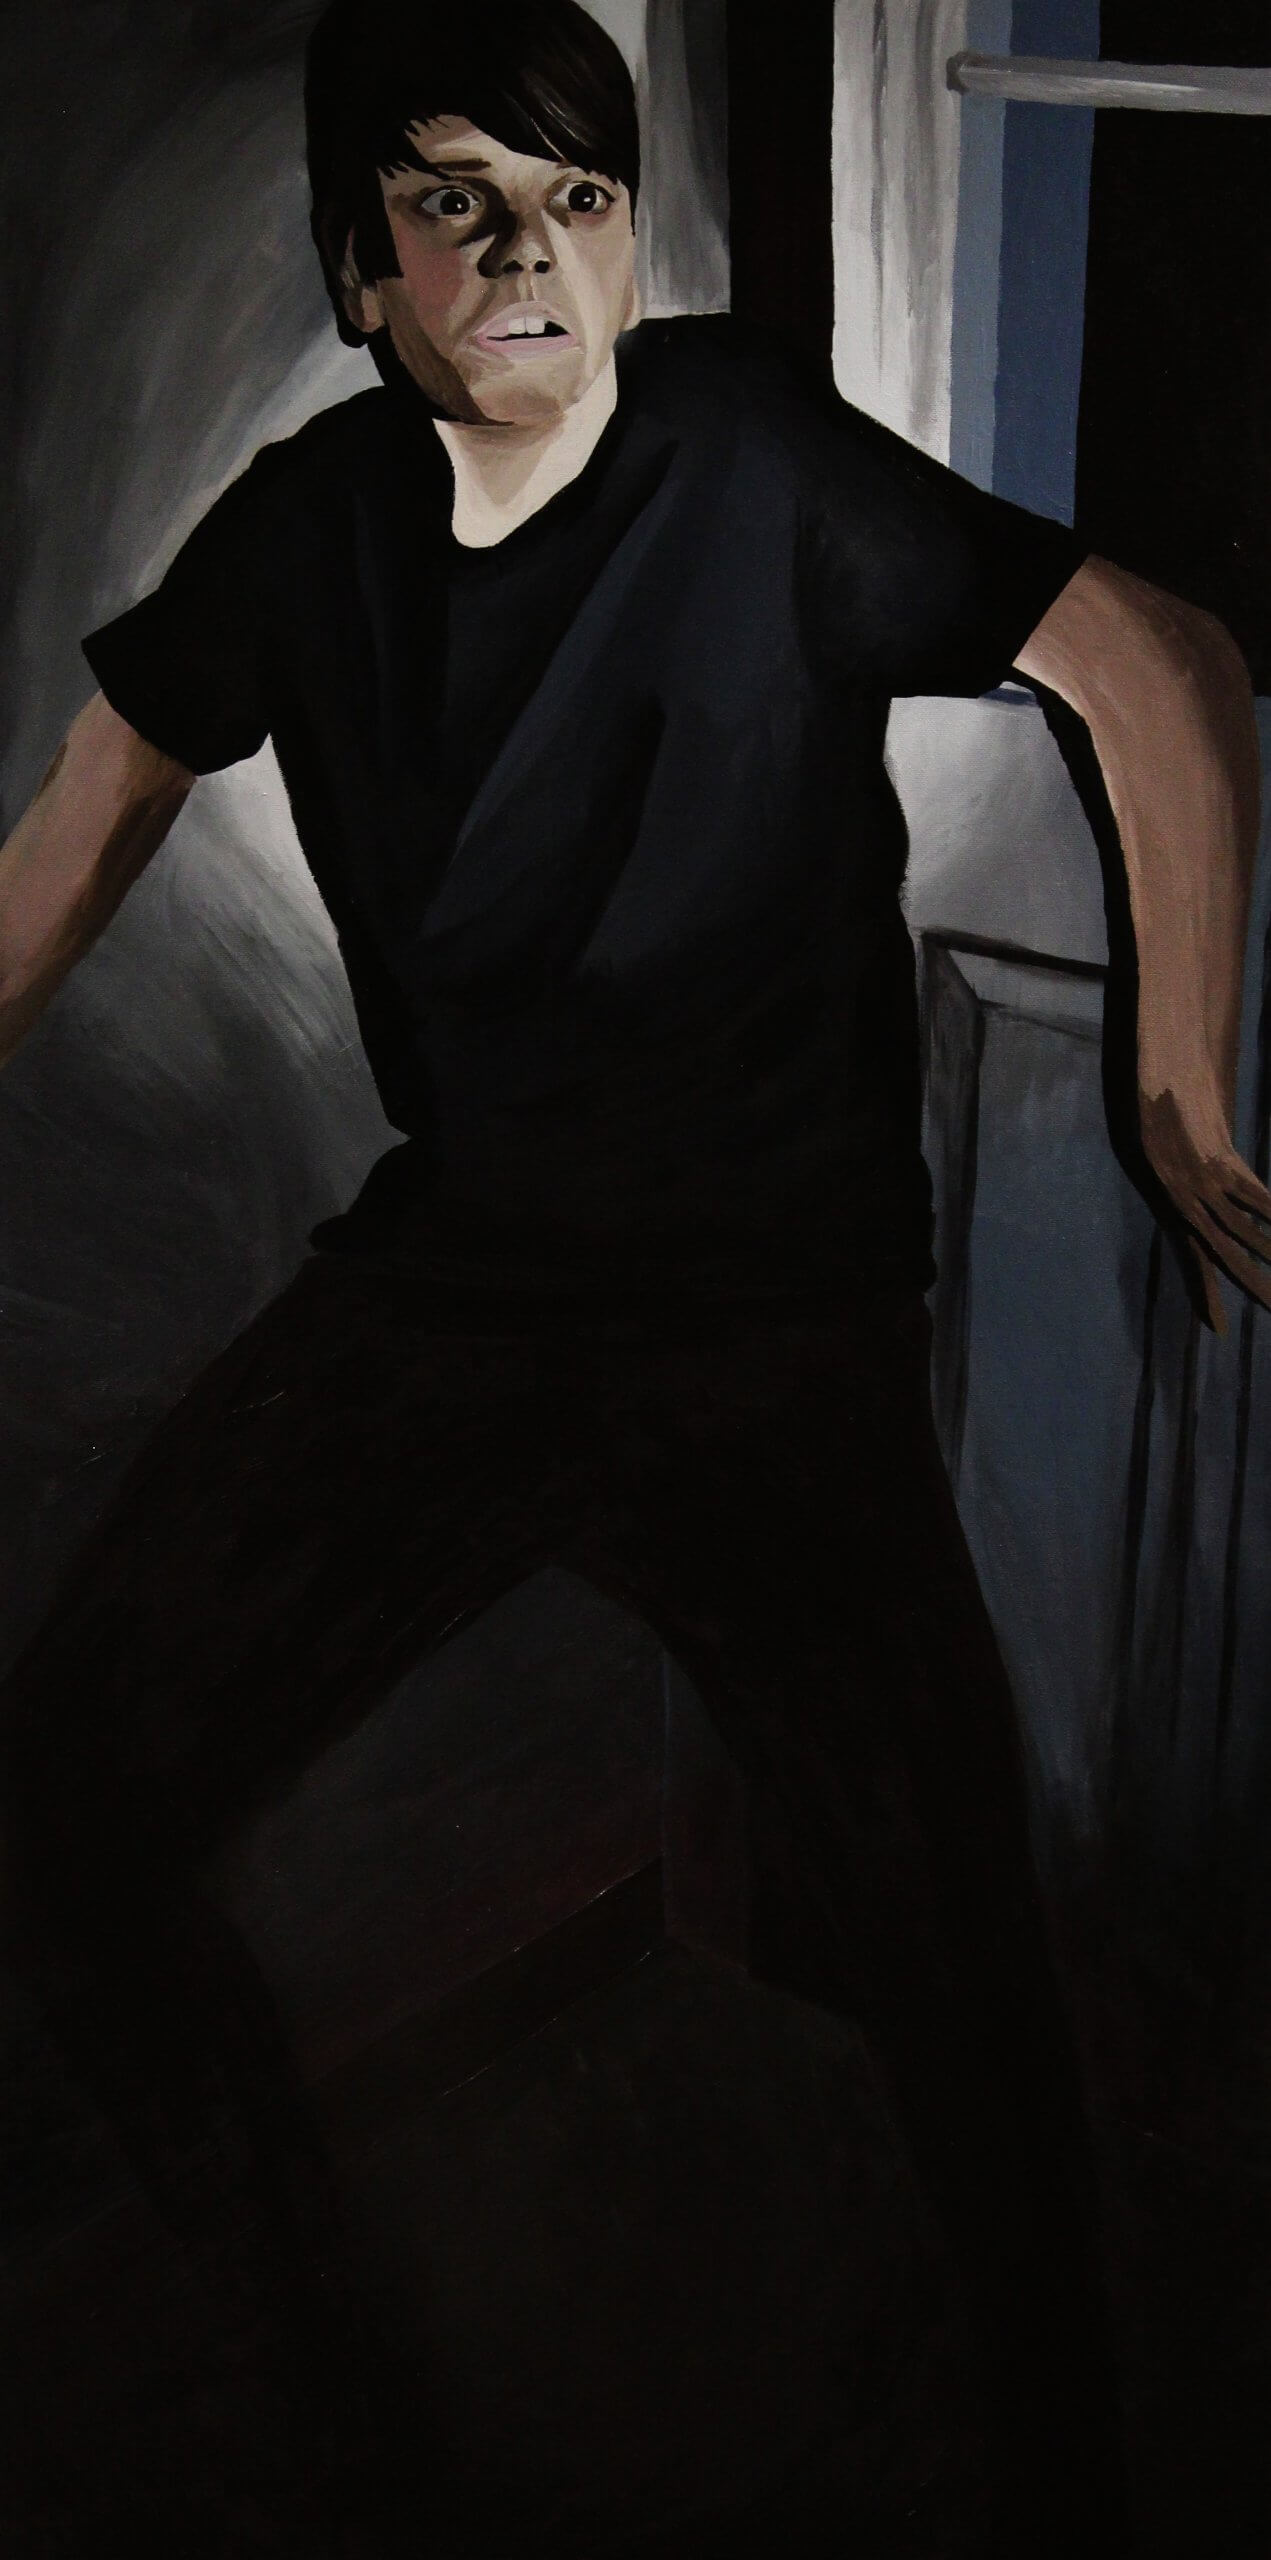 David Fontaine, "Cornered," Acrylic on Canvas, 24" x 48"